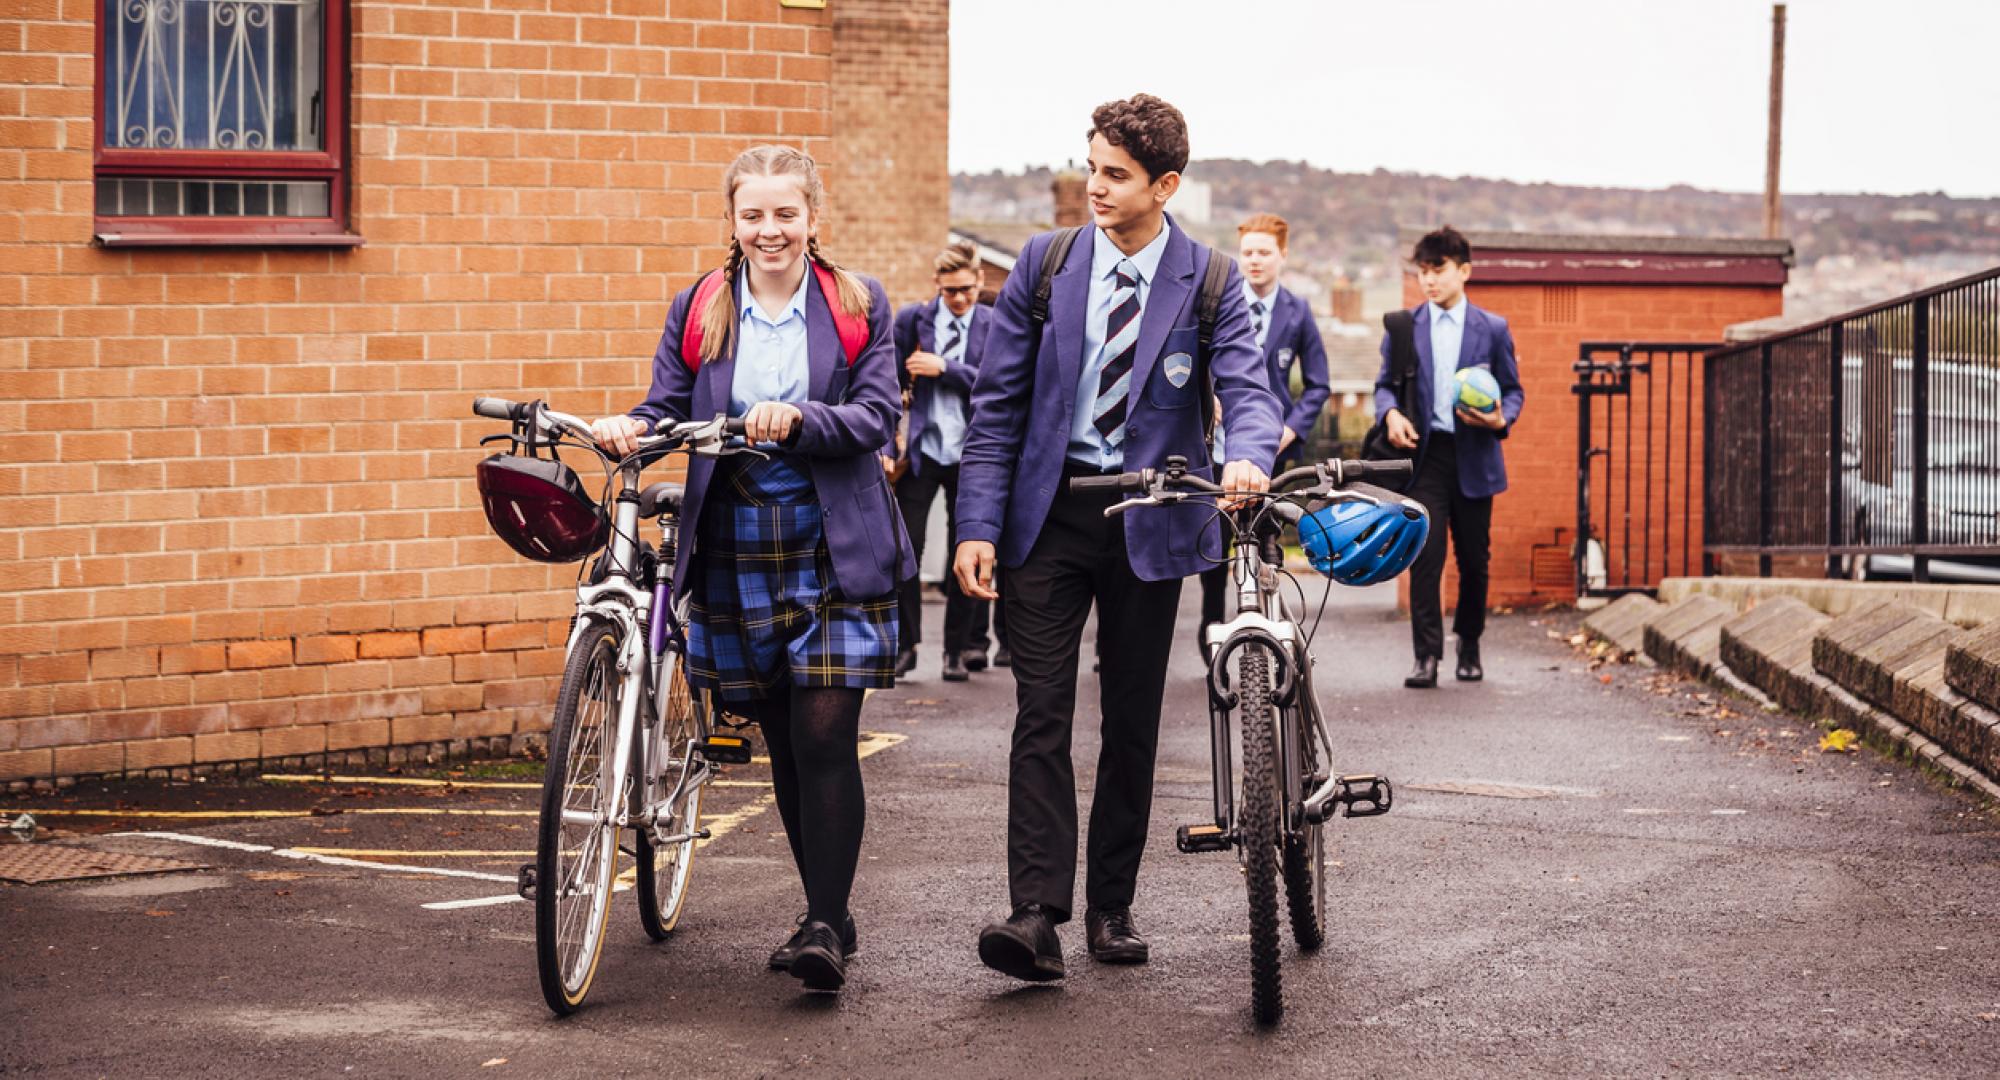 Students pushing bikes